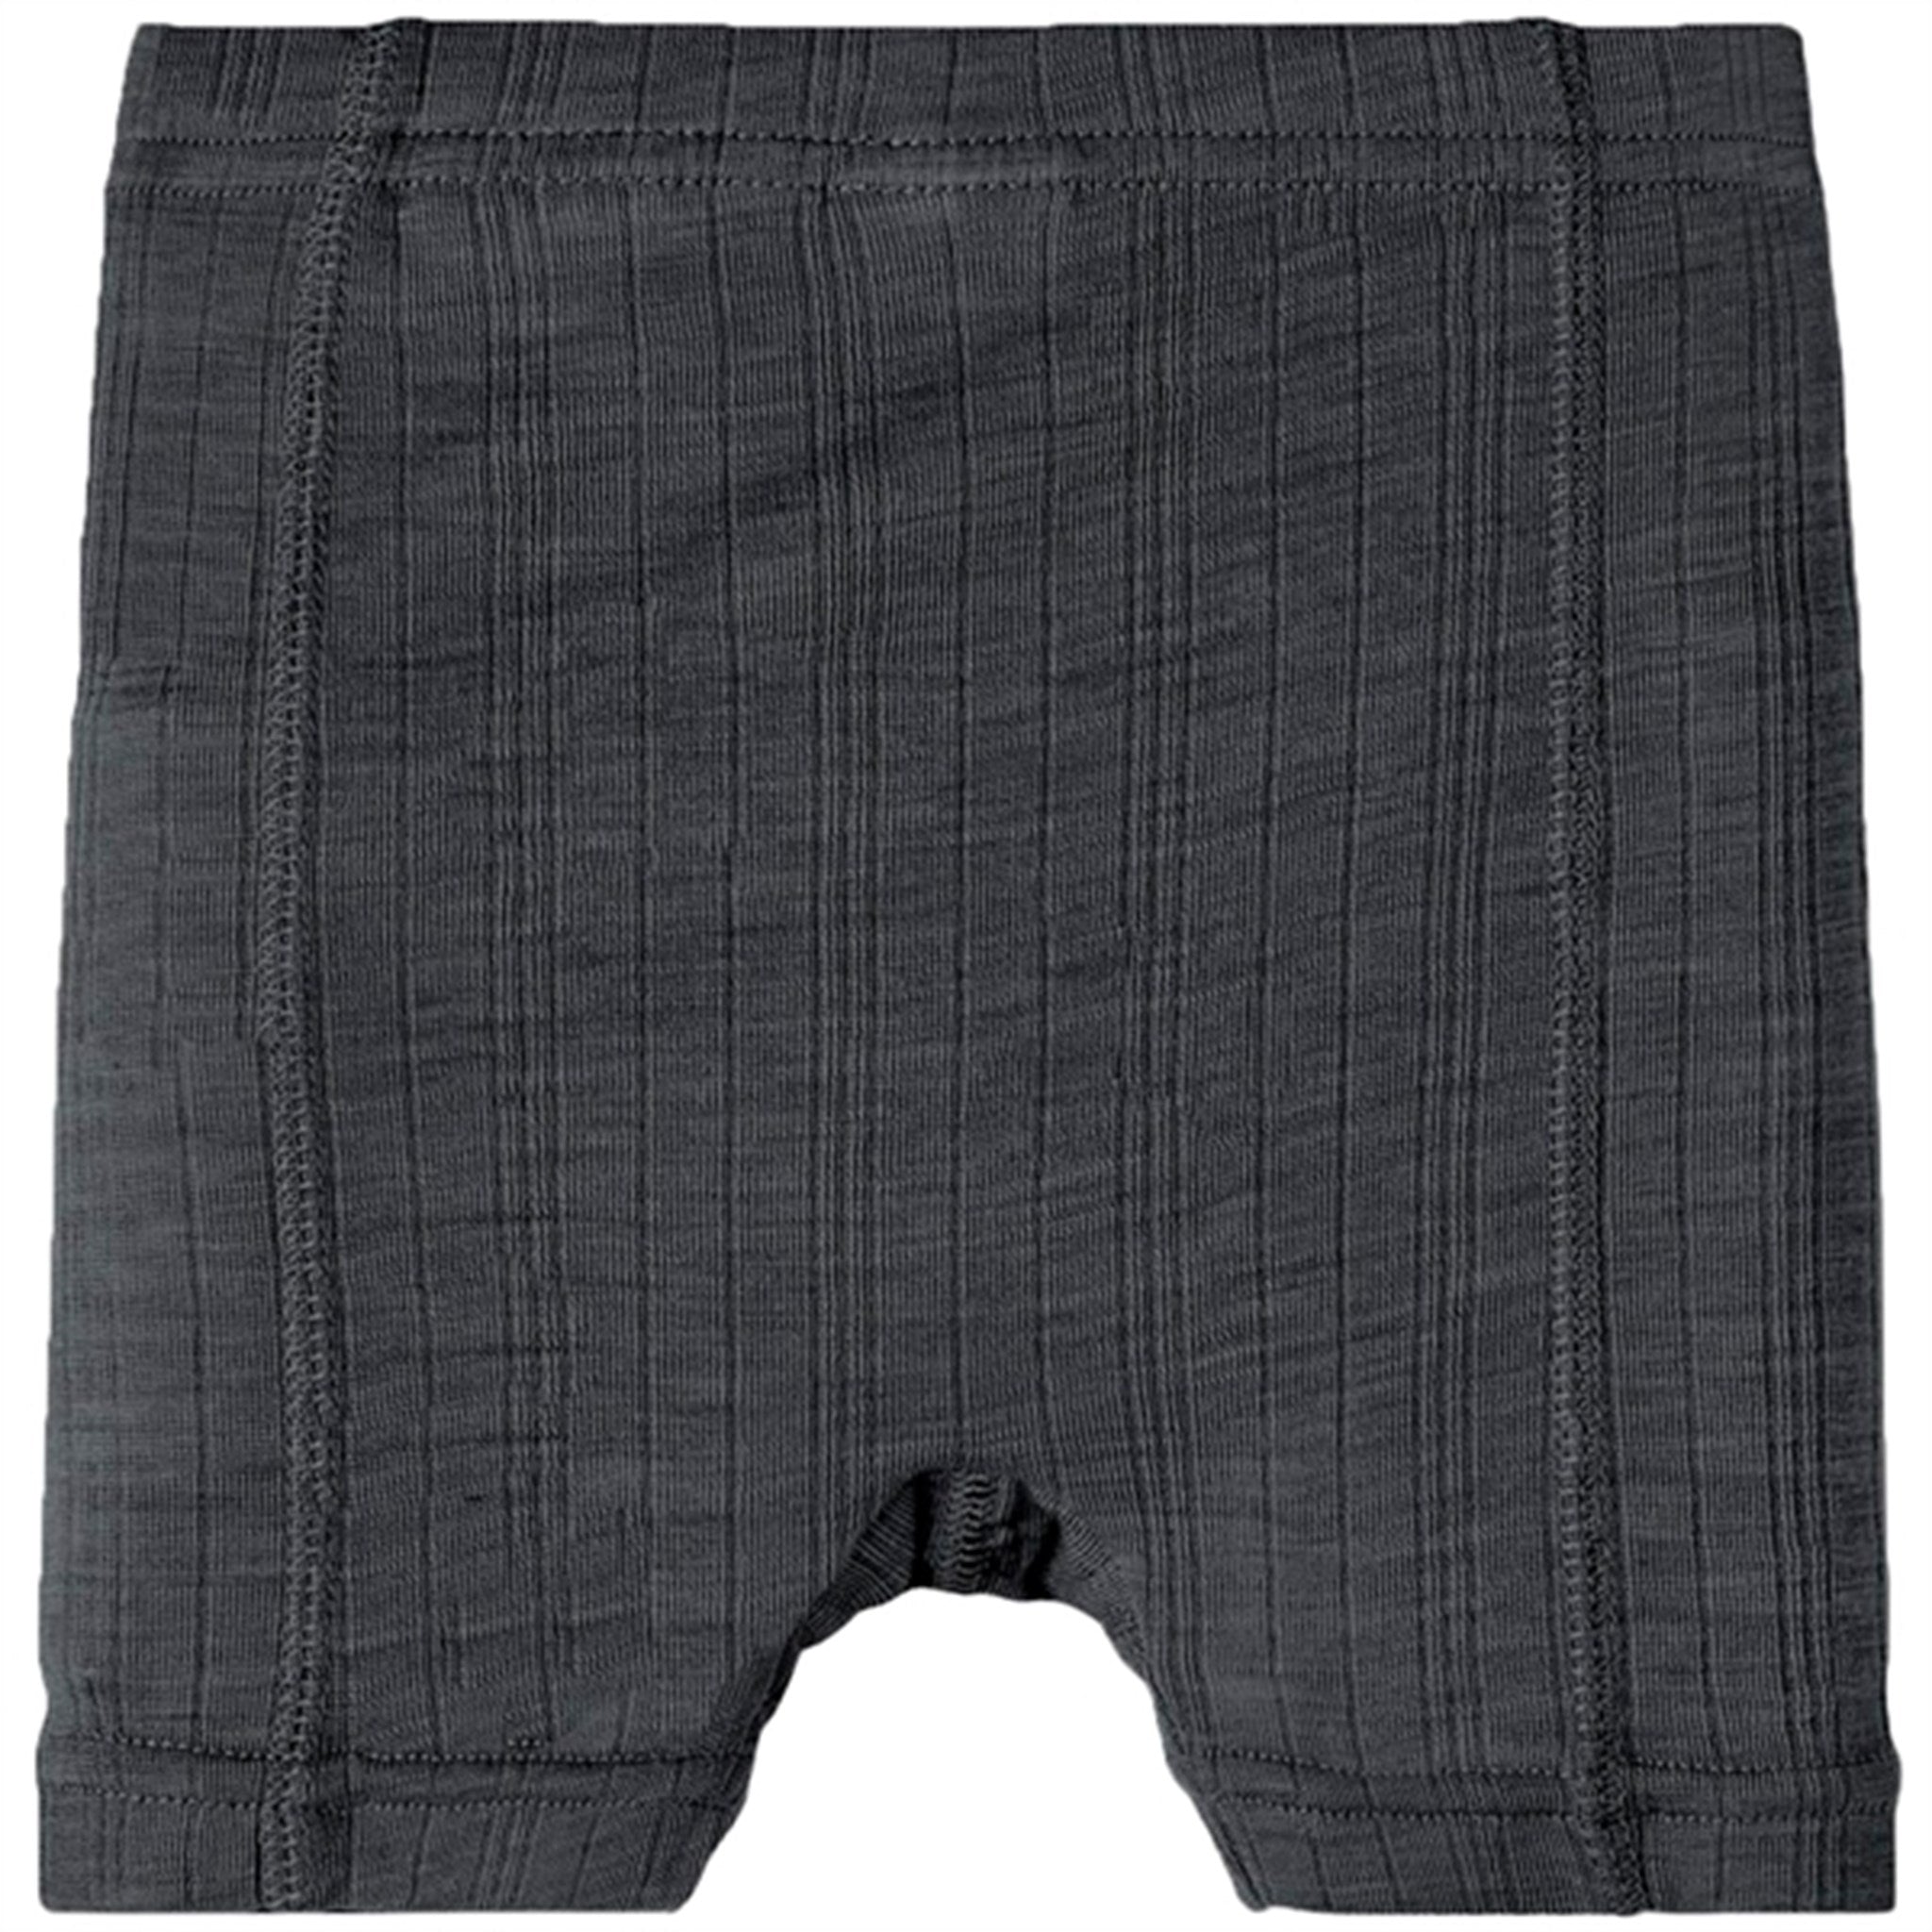 Name it Iron Gate Wang Wool Needle Boxer Shorts 2